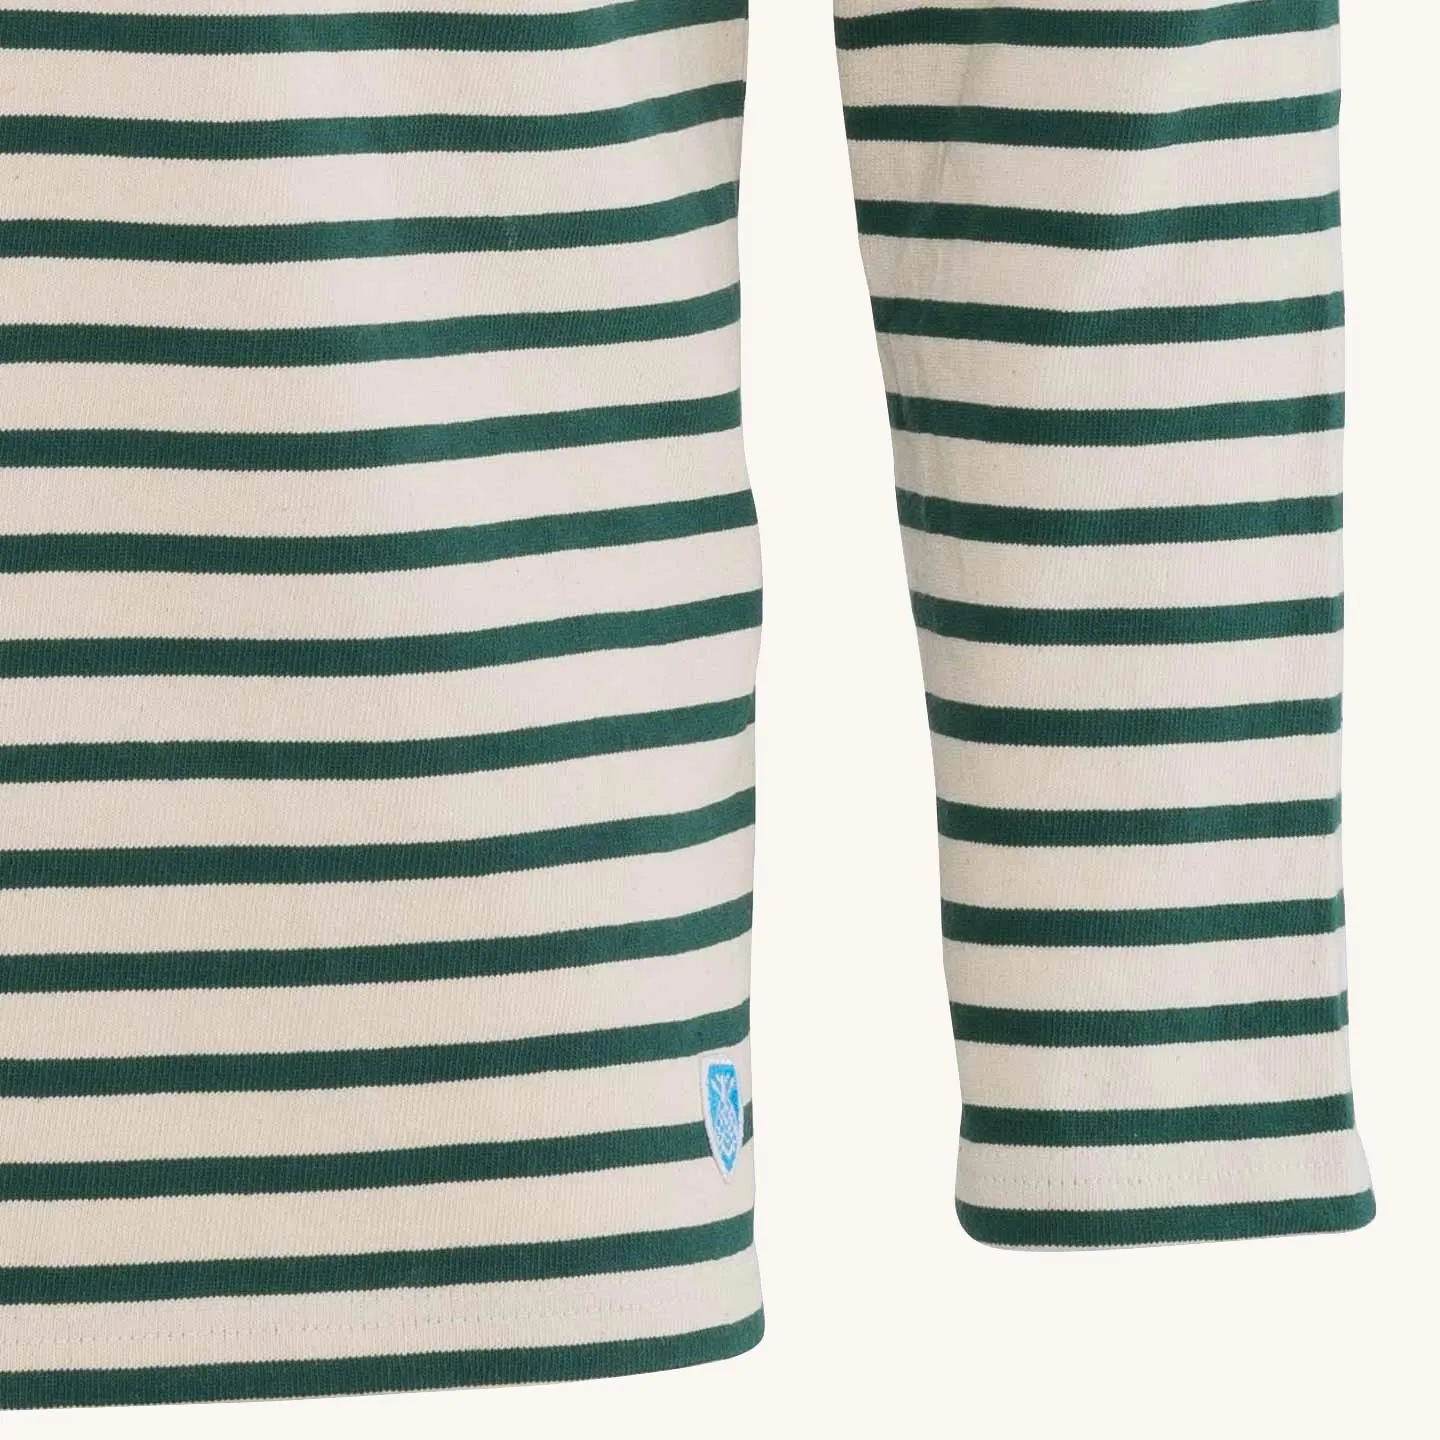 Striped shirt Ecru / Grass, unisex Orcival